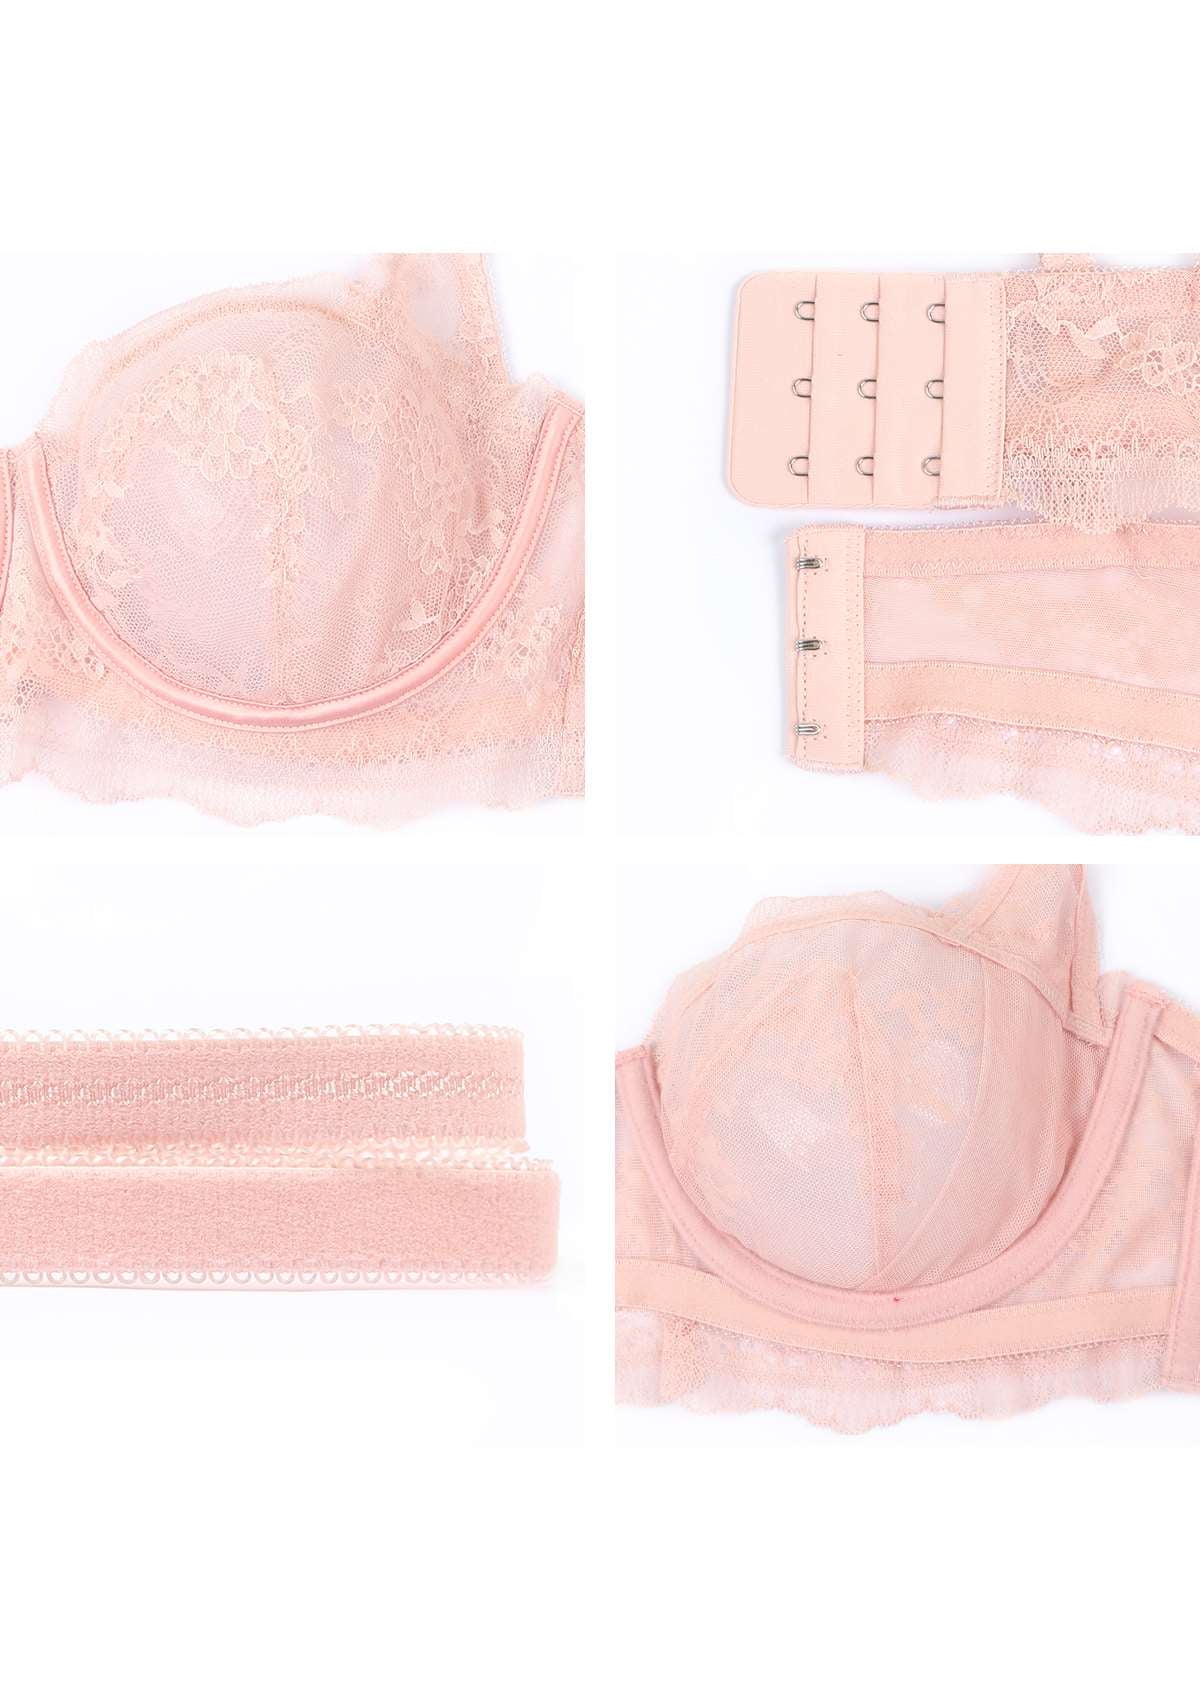 HSIA Floral Lace Unlined Bridal Balconette Delicate Bra Panty Set - Pink / 42 / D